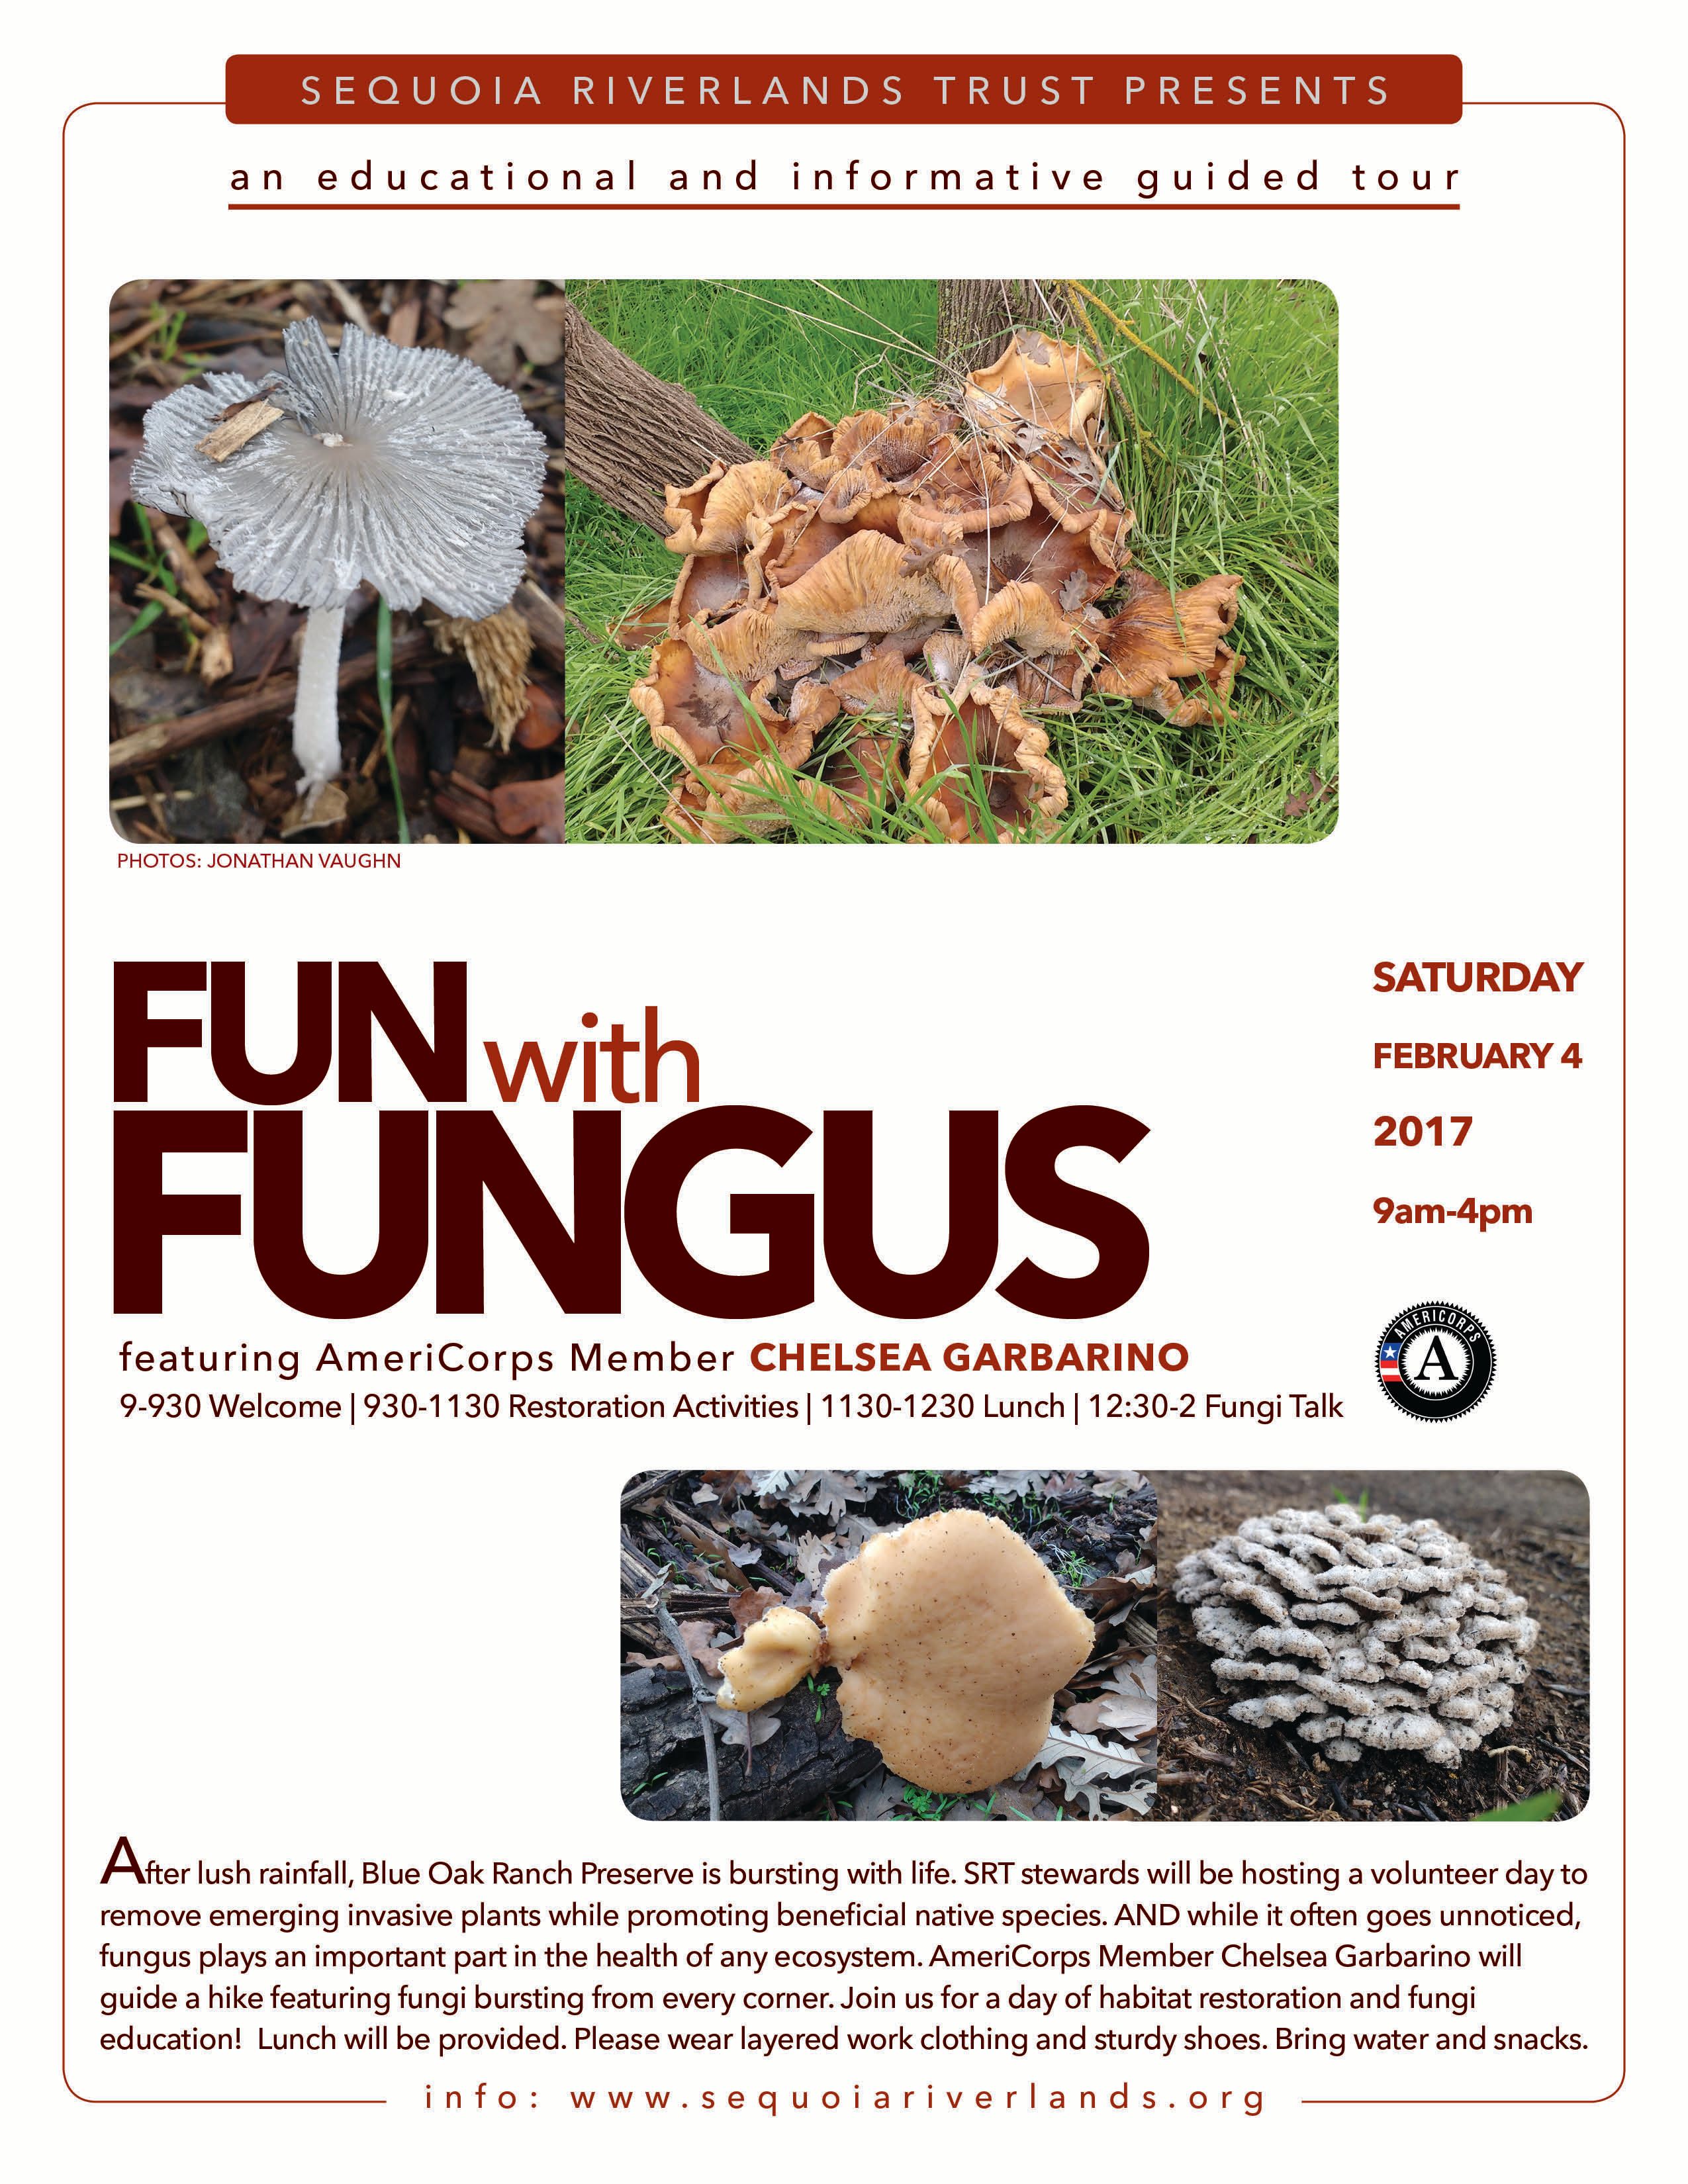 Fungi event at Blue Oak Ranch Preserve